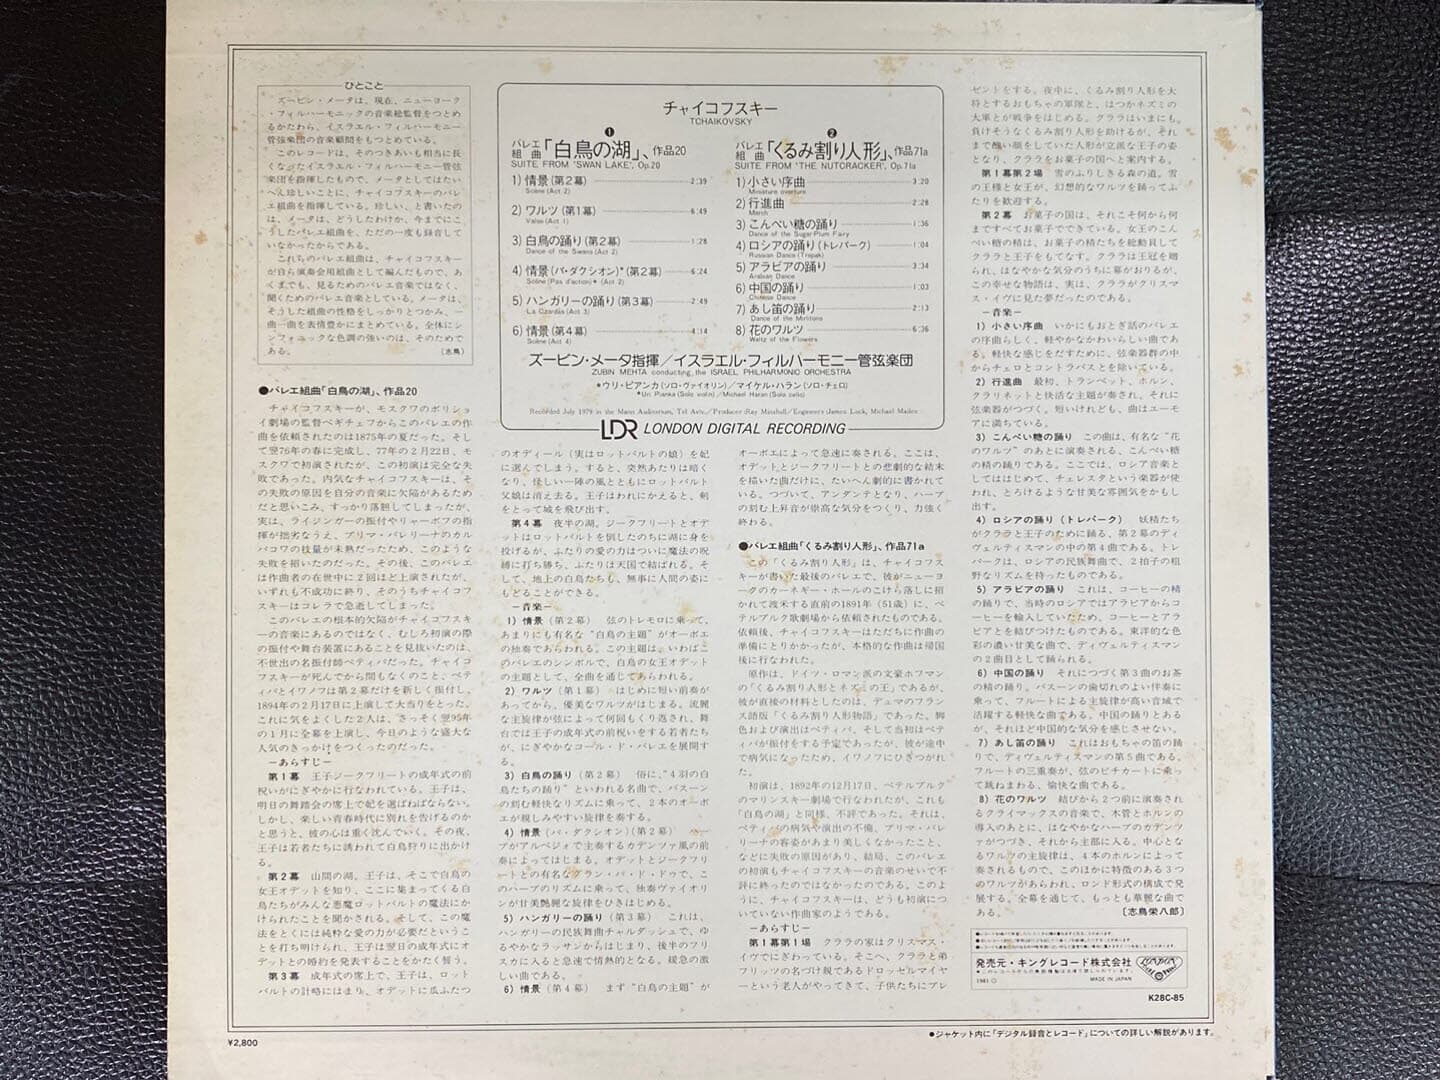 [LP] 주빈 메타 - Zubin Mehta - Tchaikovsky Suites From Swan Lake LP [일본반]